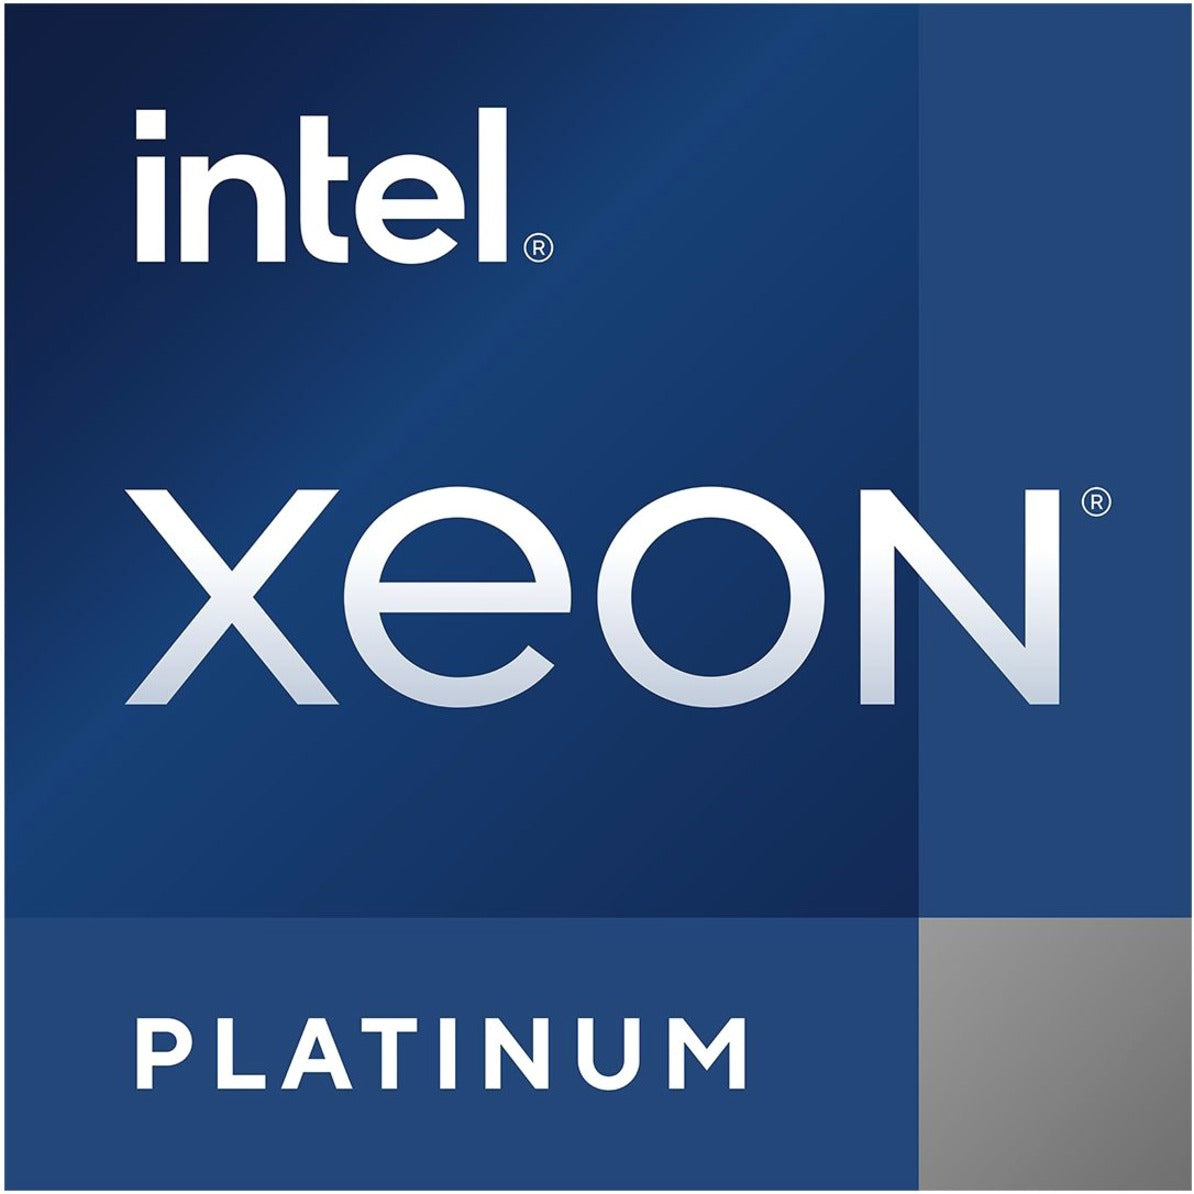 Intel CD8068904722404 Xeon Platinum Dotriaconta-core 8362 2.8GHz Server Processor, 32 Cores, 48MB Cache, 10nm, 3rd Gen